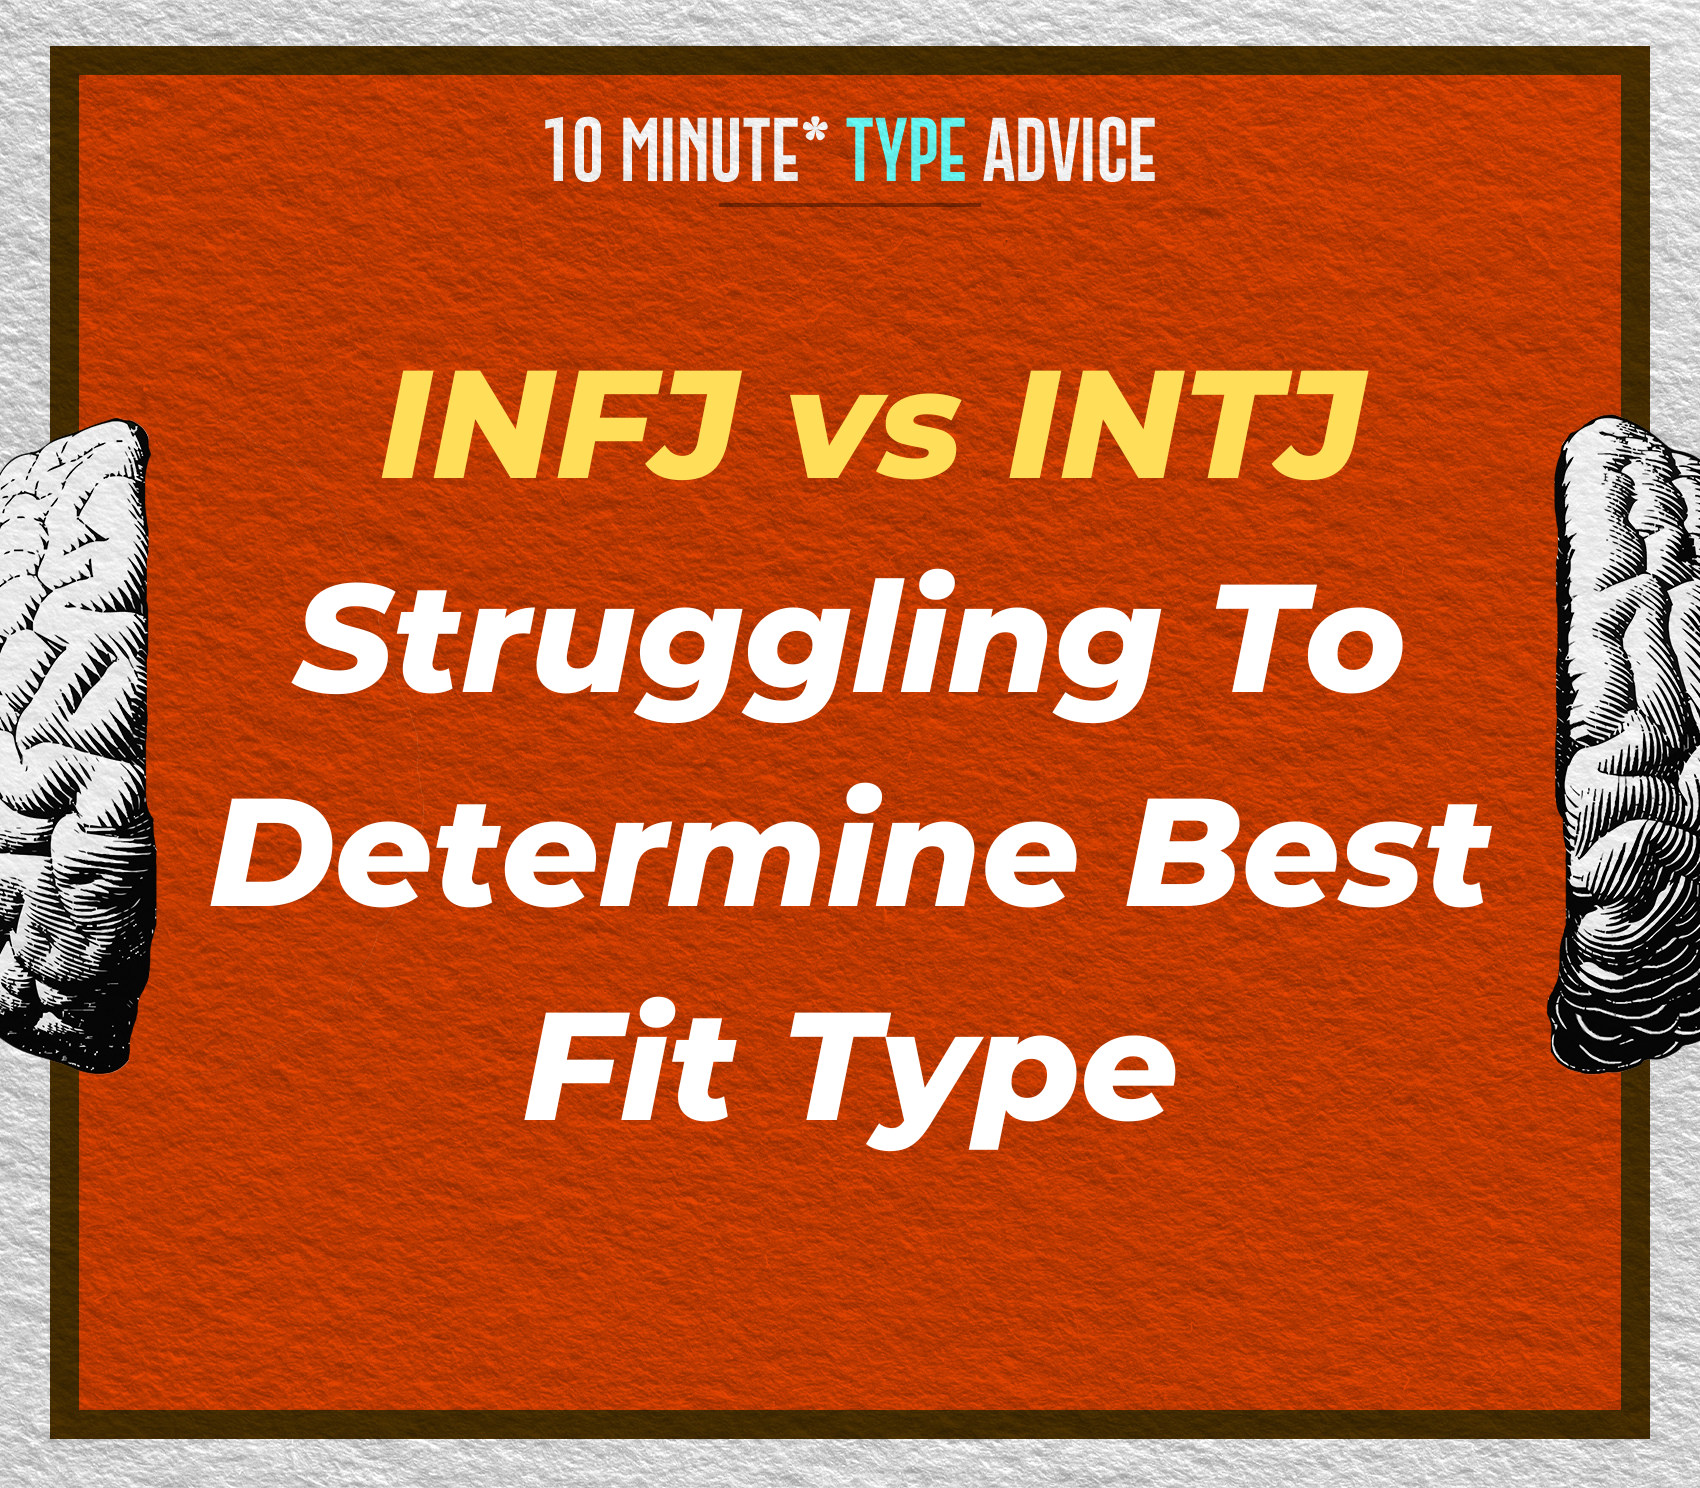 INFJ vs INTJ - Struggling To Determine Best Fit Type  | 10 Min Type Advice | S03:04